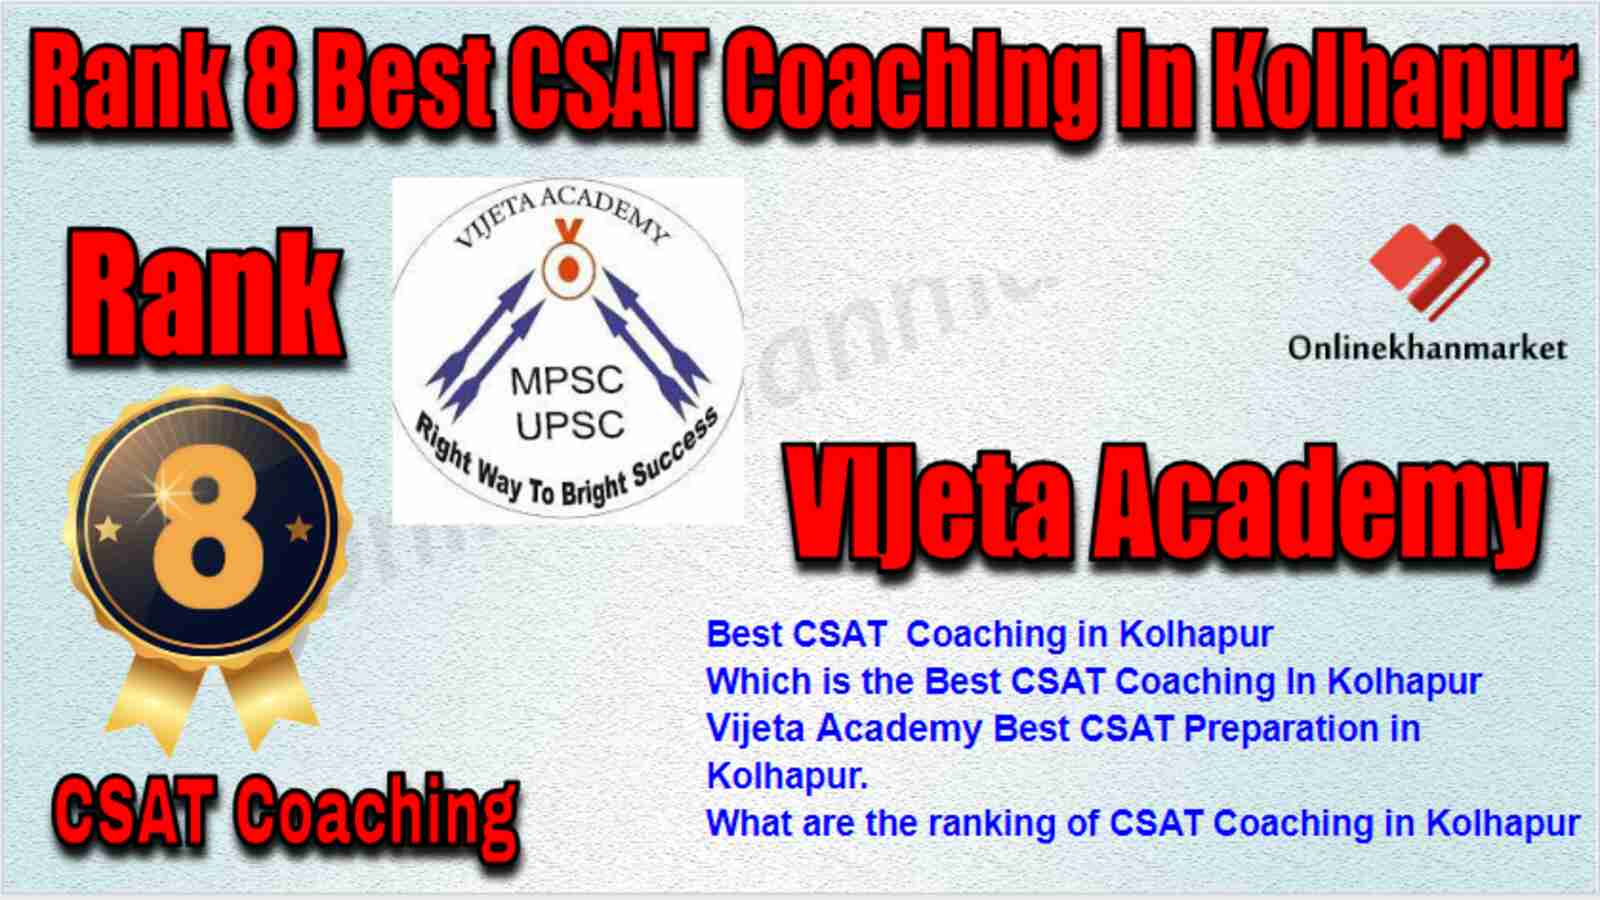 Rank 8 Best CSAT Coaching in Kolhapur